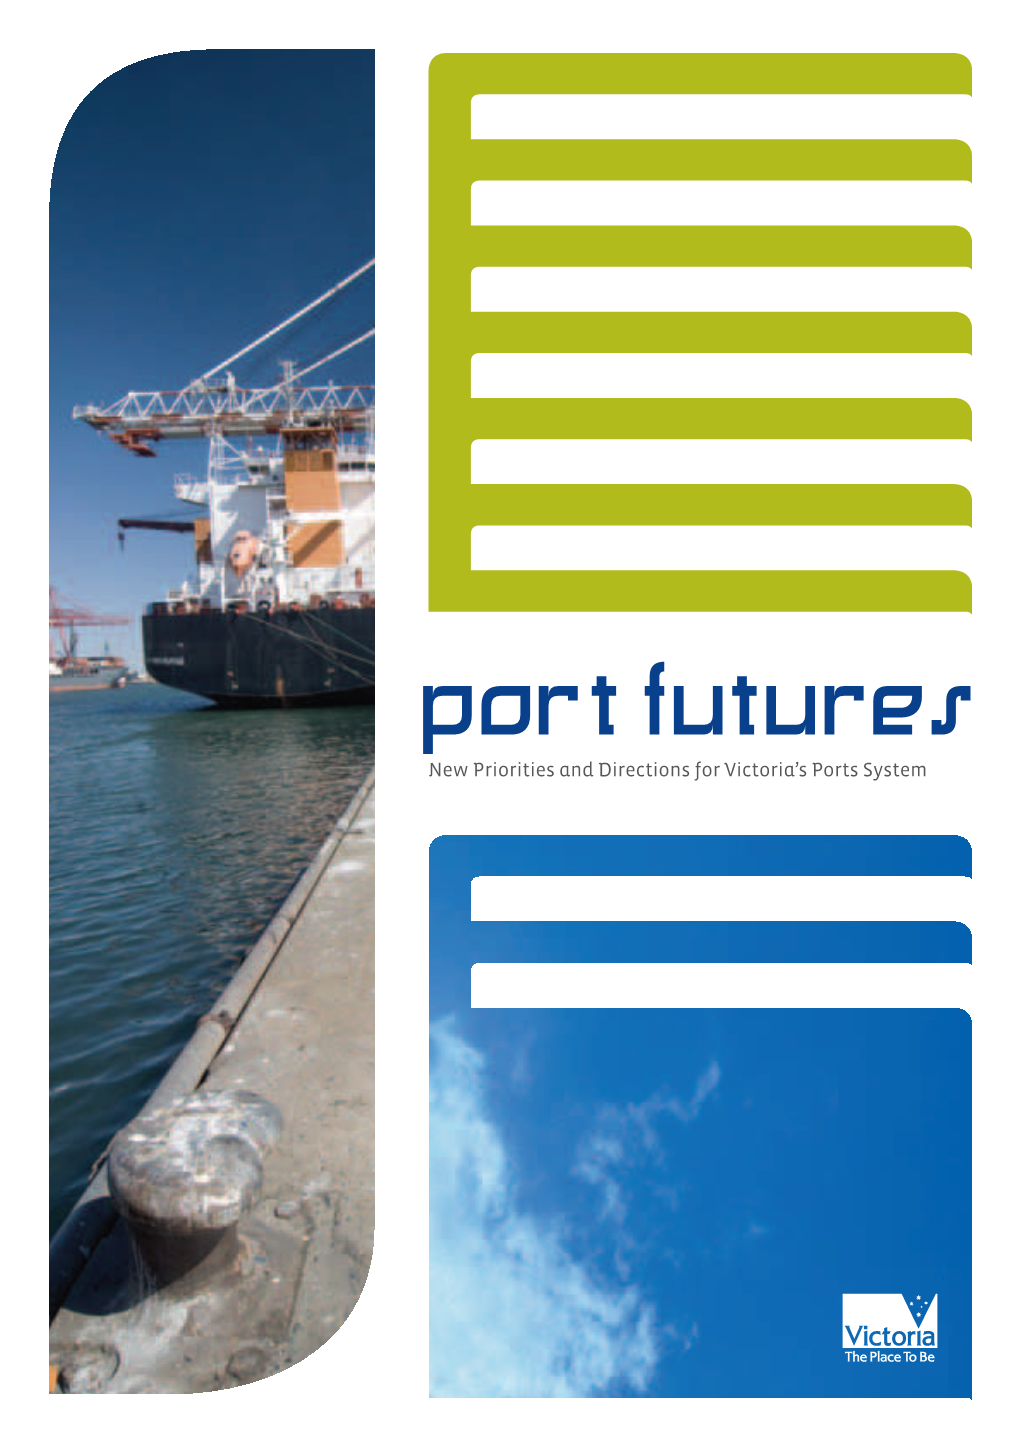 Ports Futures